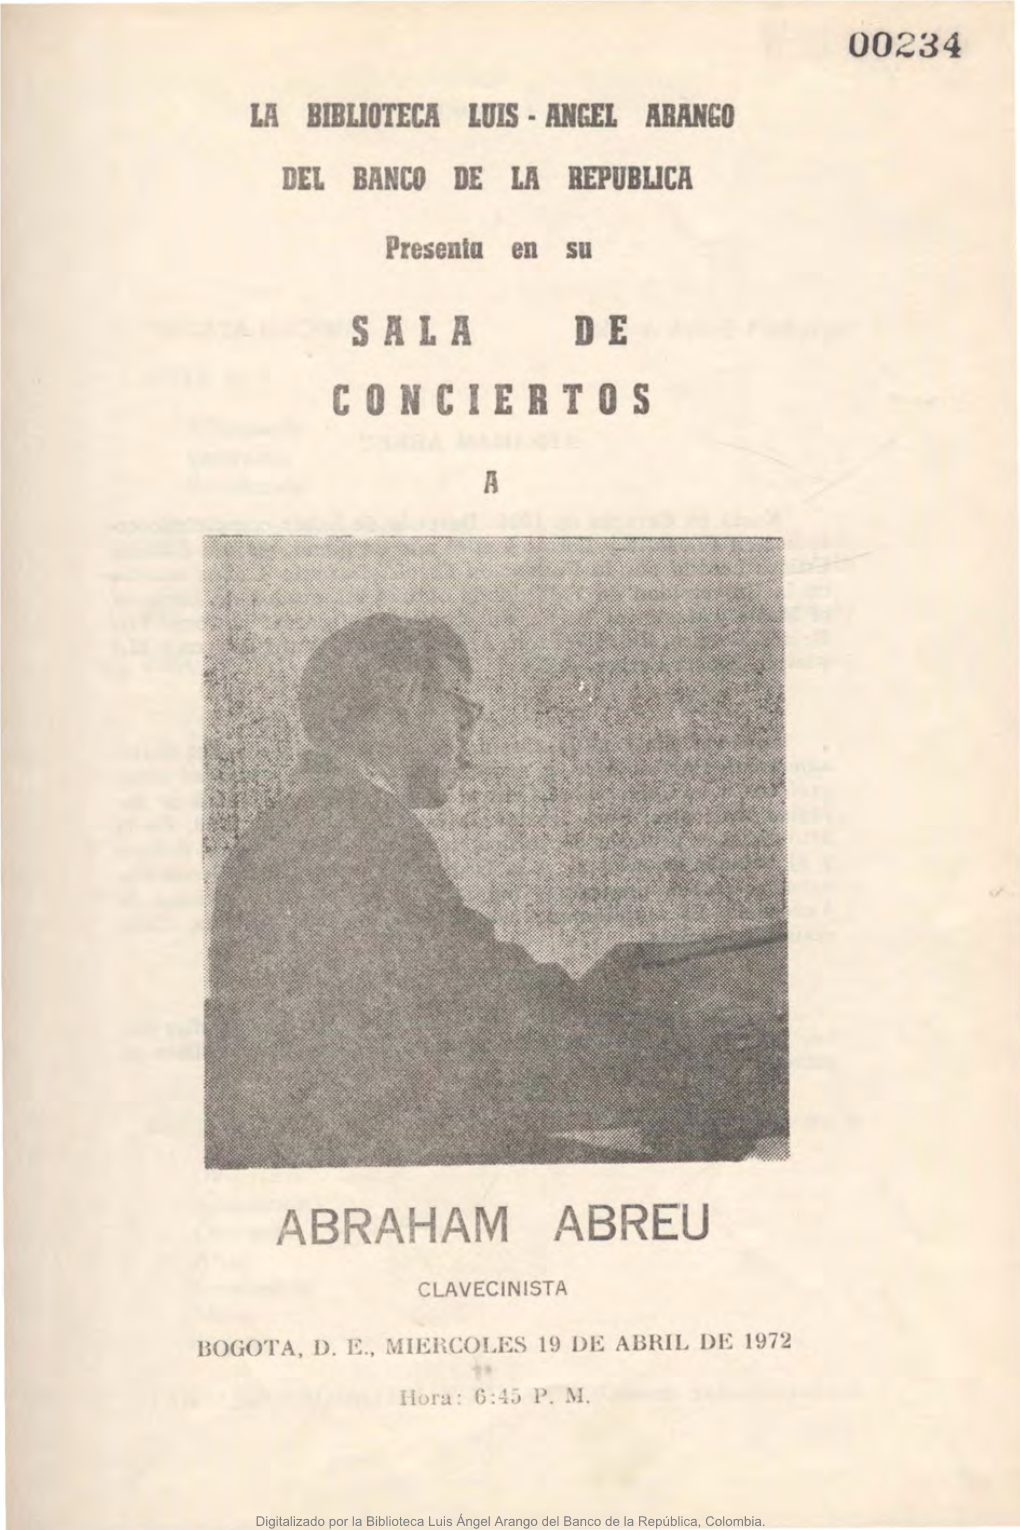 Abraham Abreu Clavencista